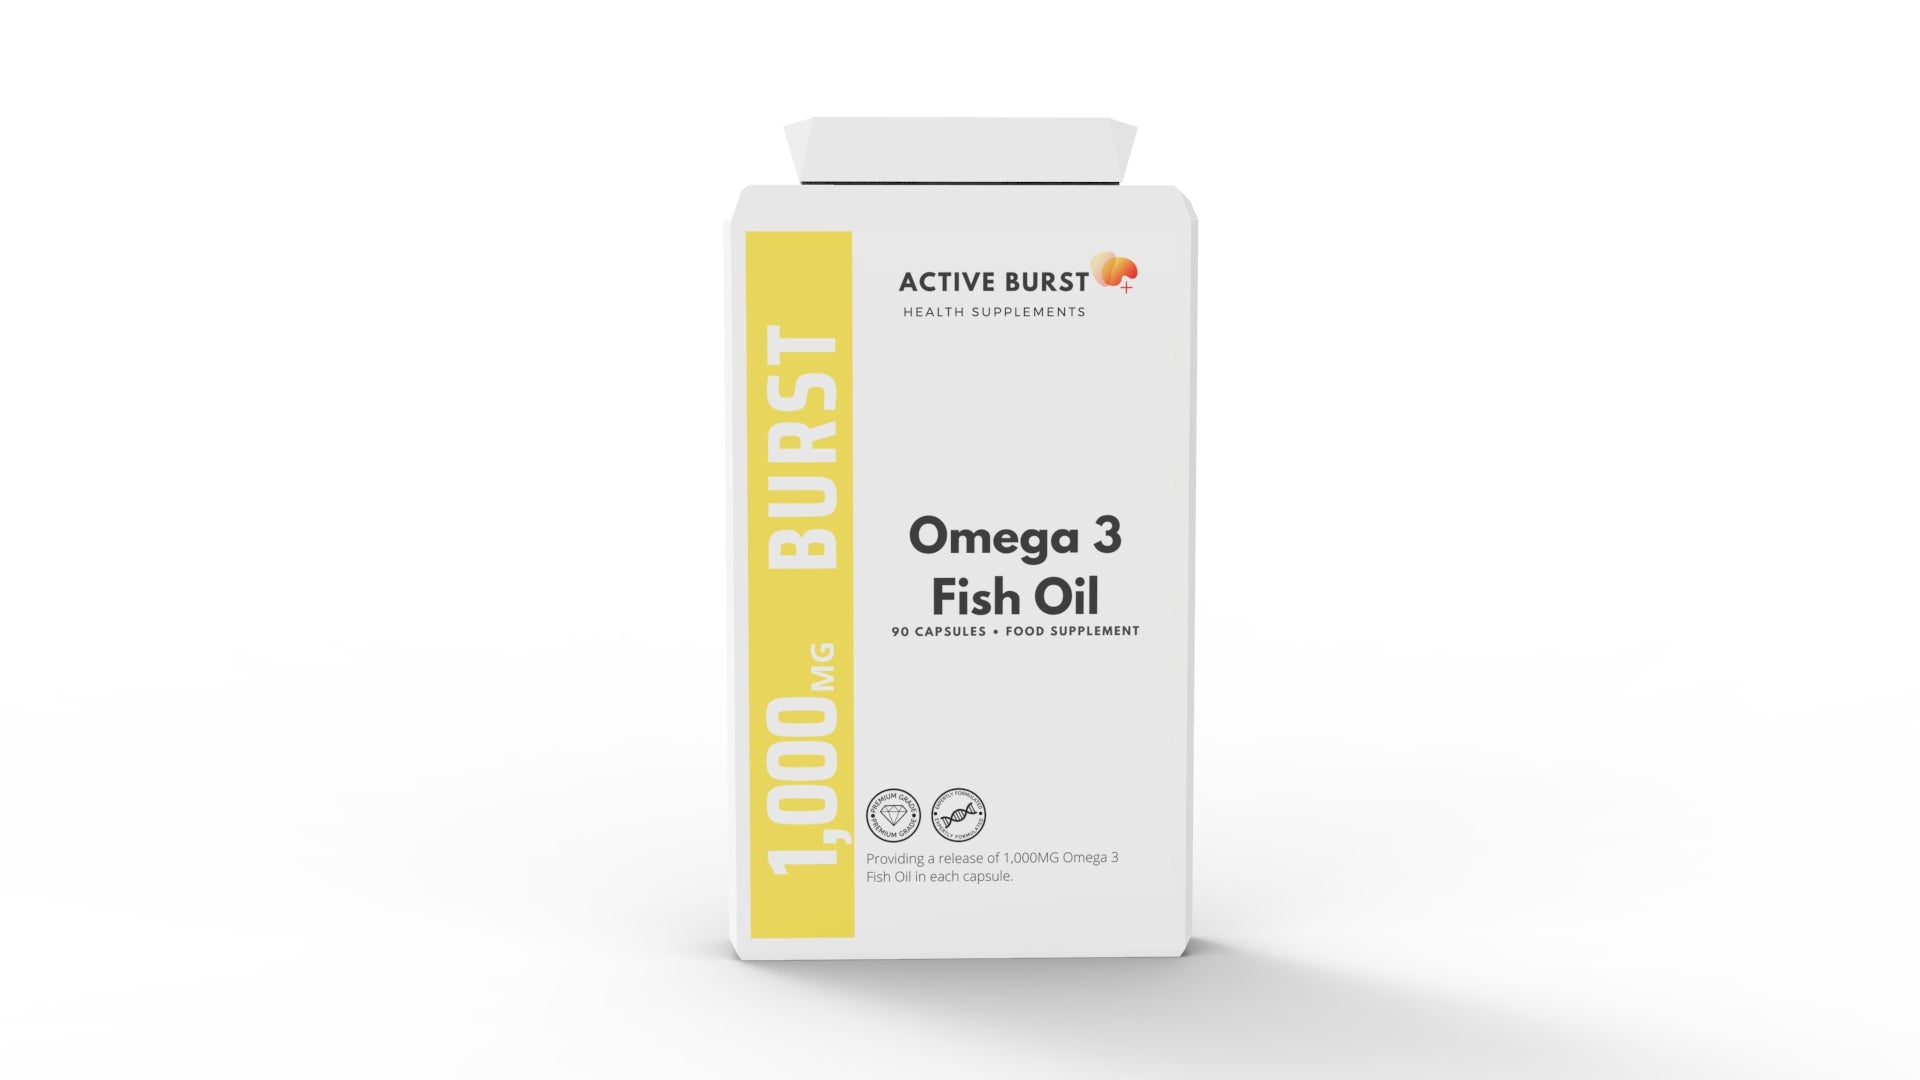 Omega 3 Fish Oil 1,000mg 90 Softgel Capsules